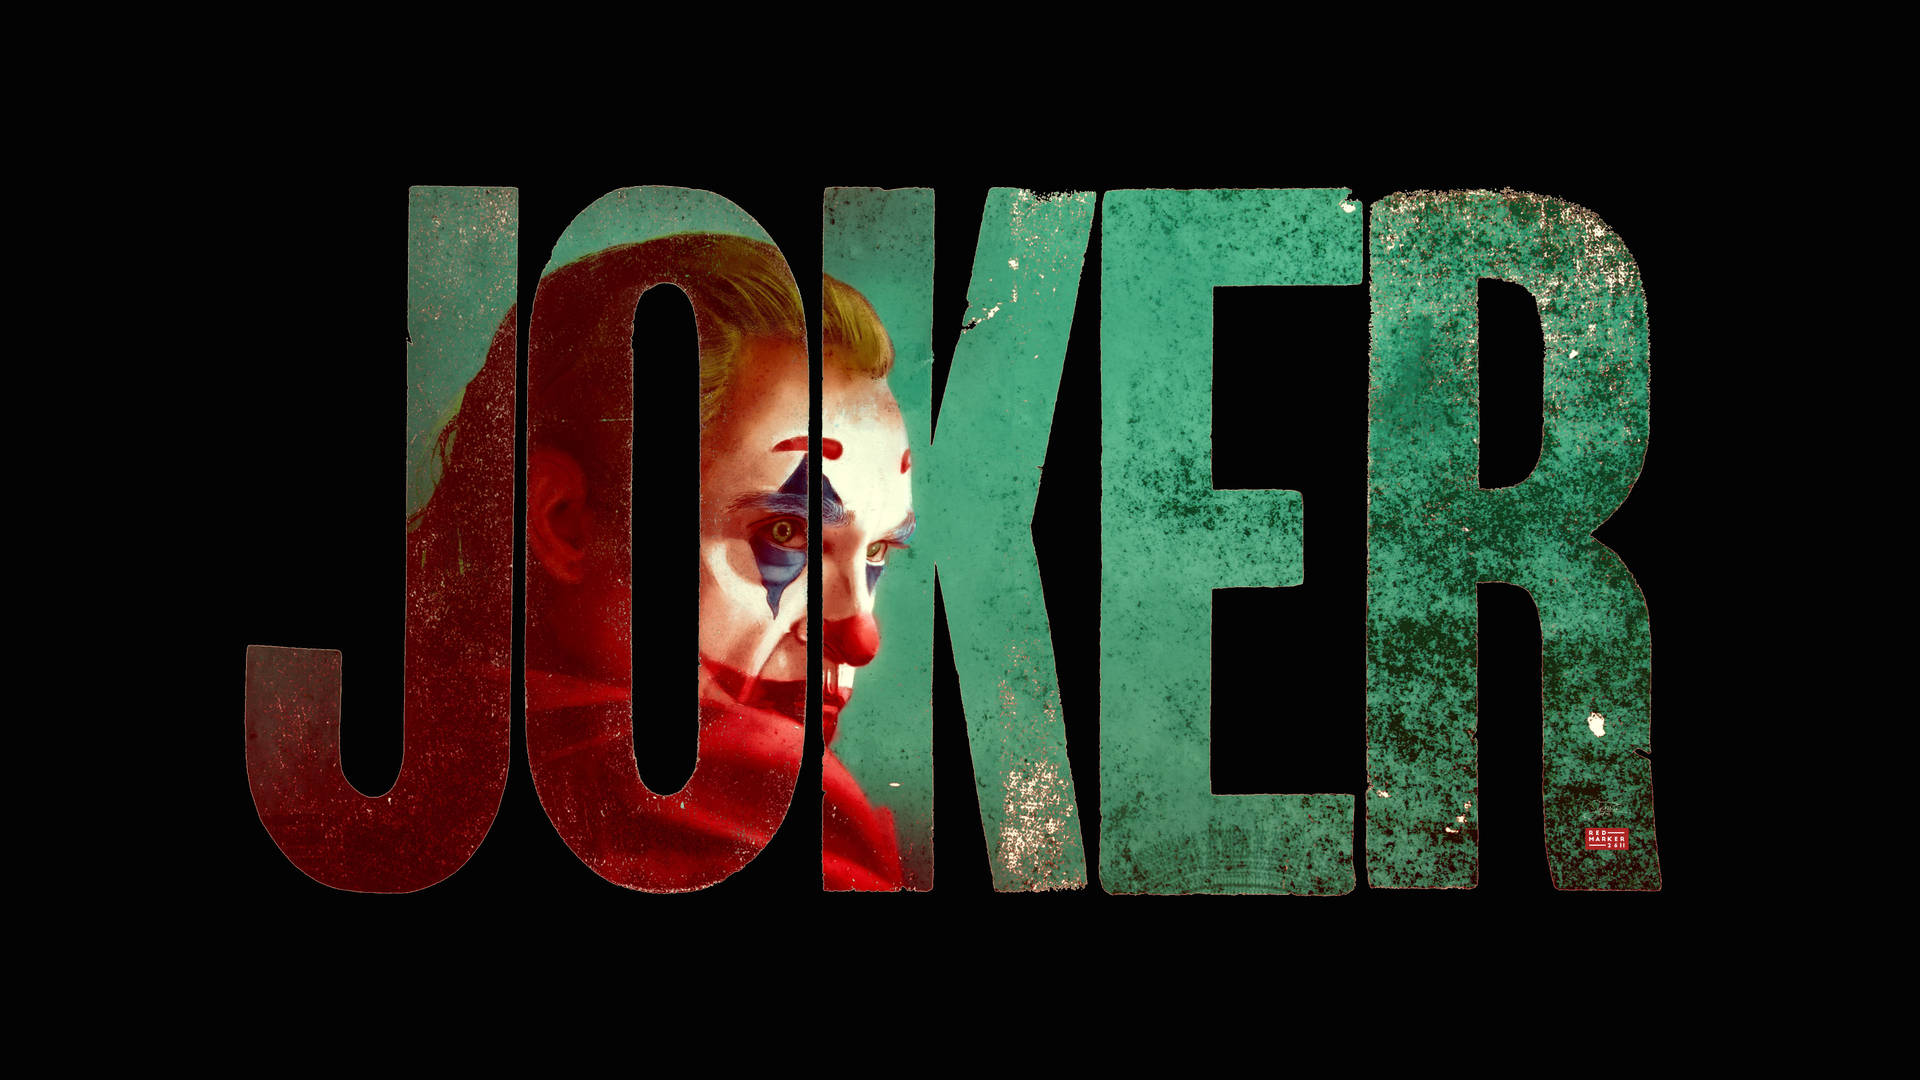 Joker 2019 Word Art